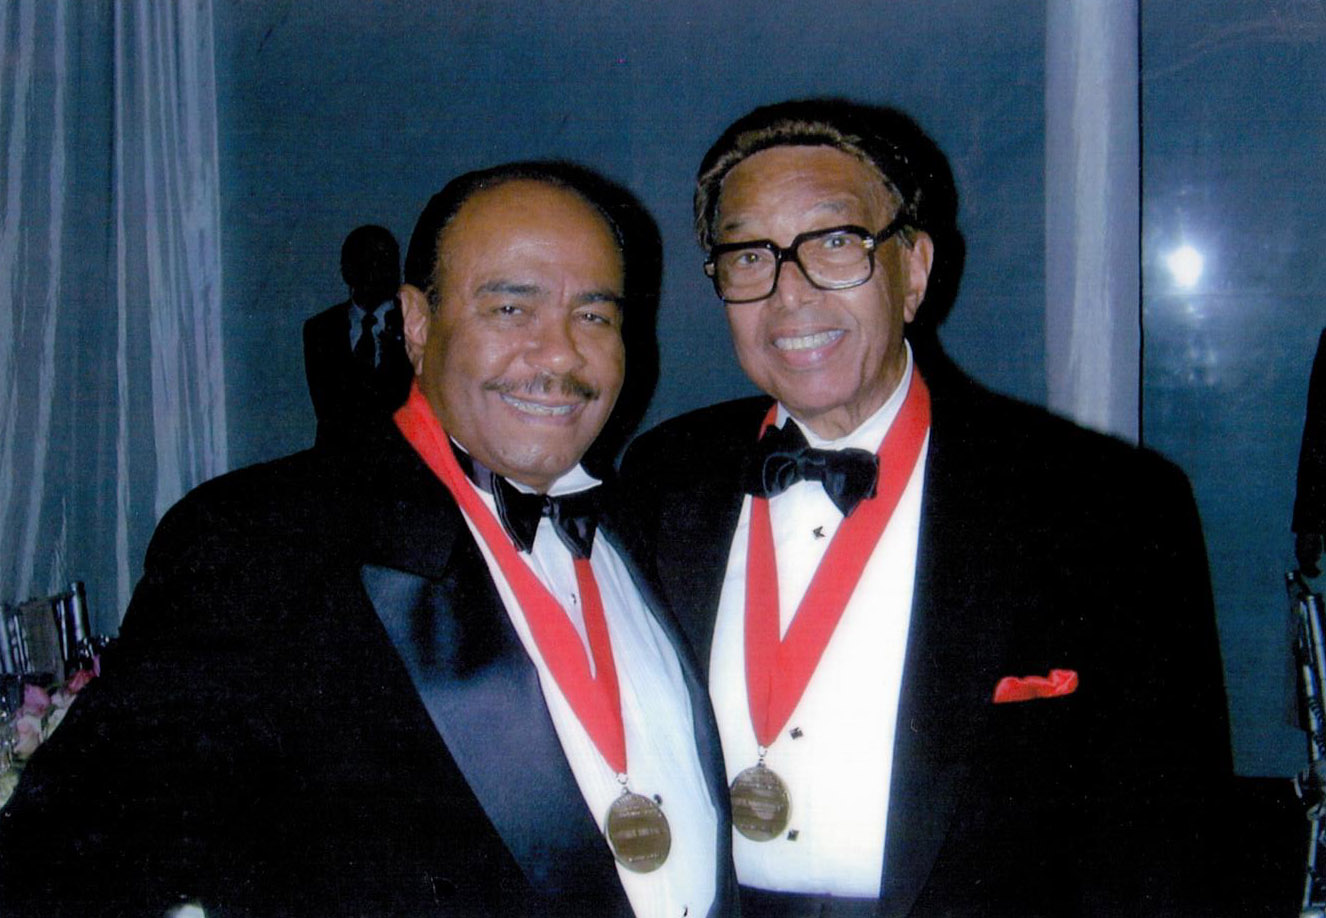 1996 NEA Jazz Master Benny Golson and 1988 NEA Jazz Master Billy Taylor